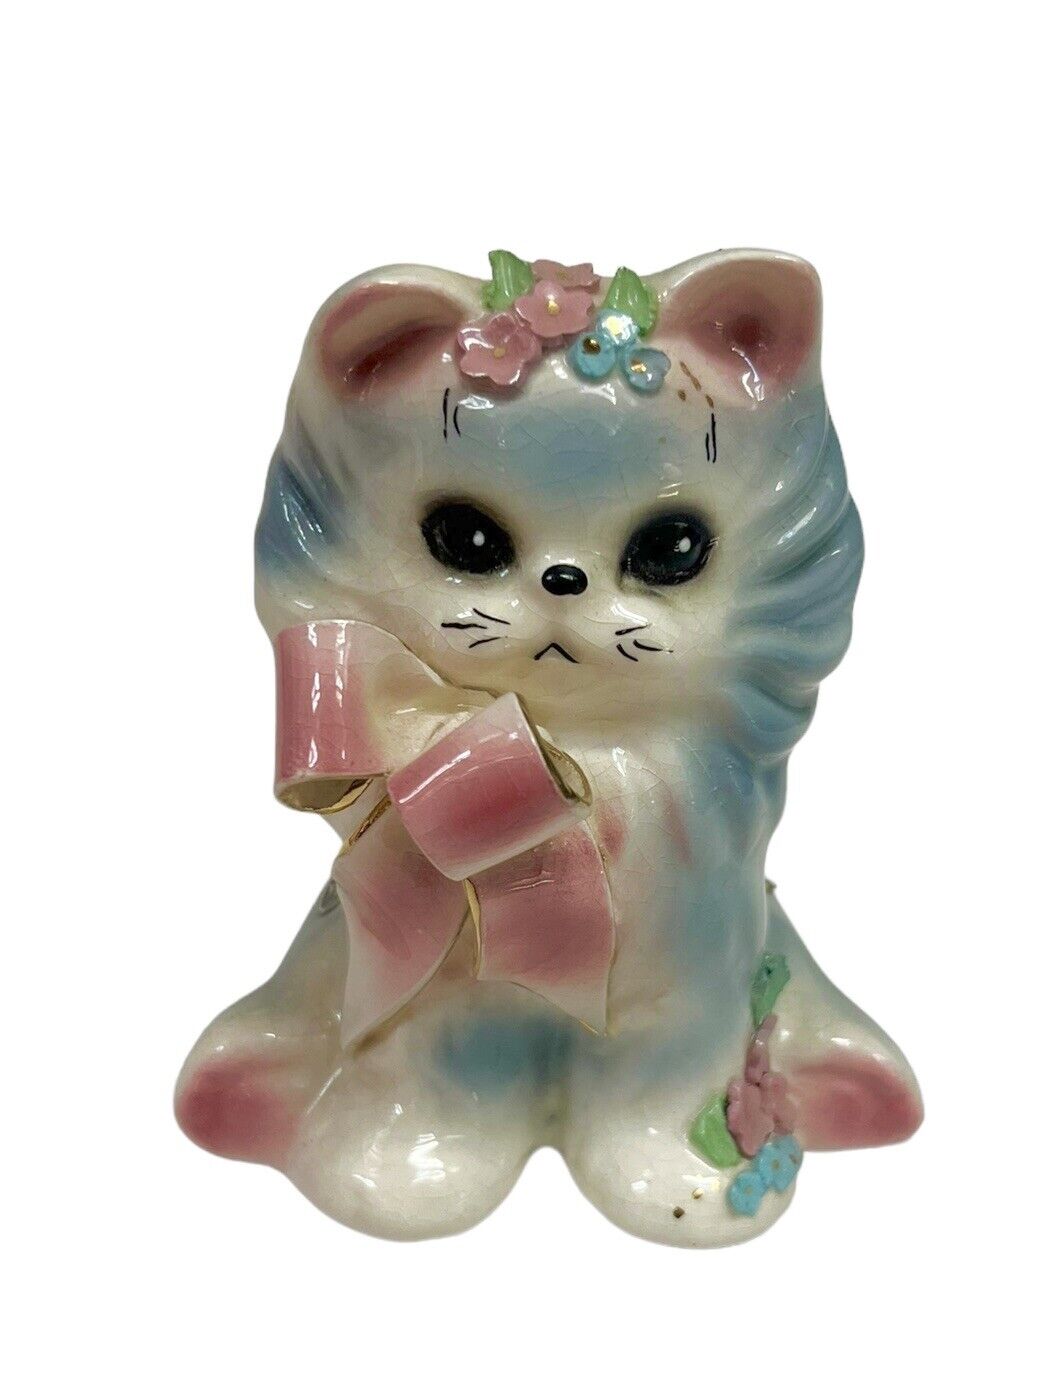 Joseph Originals - Puff - Blue Cat Kitten Pink Bow Figurine - Vintage Porcelain